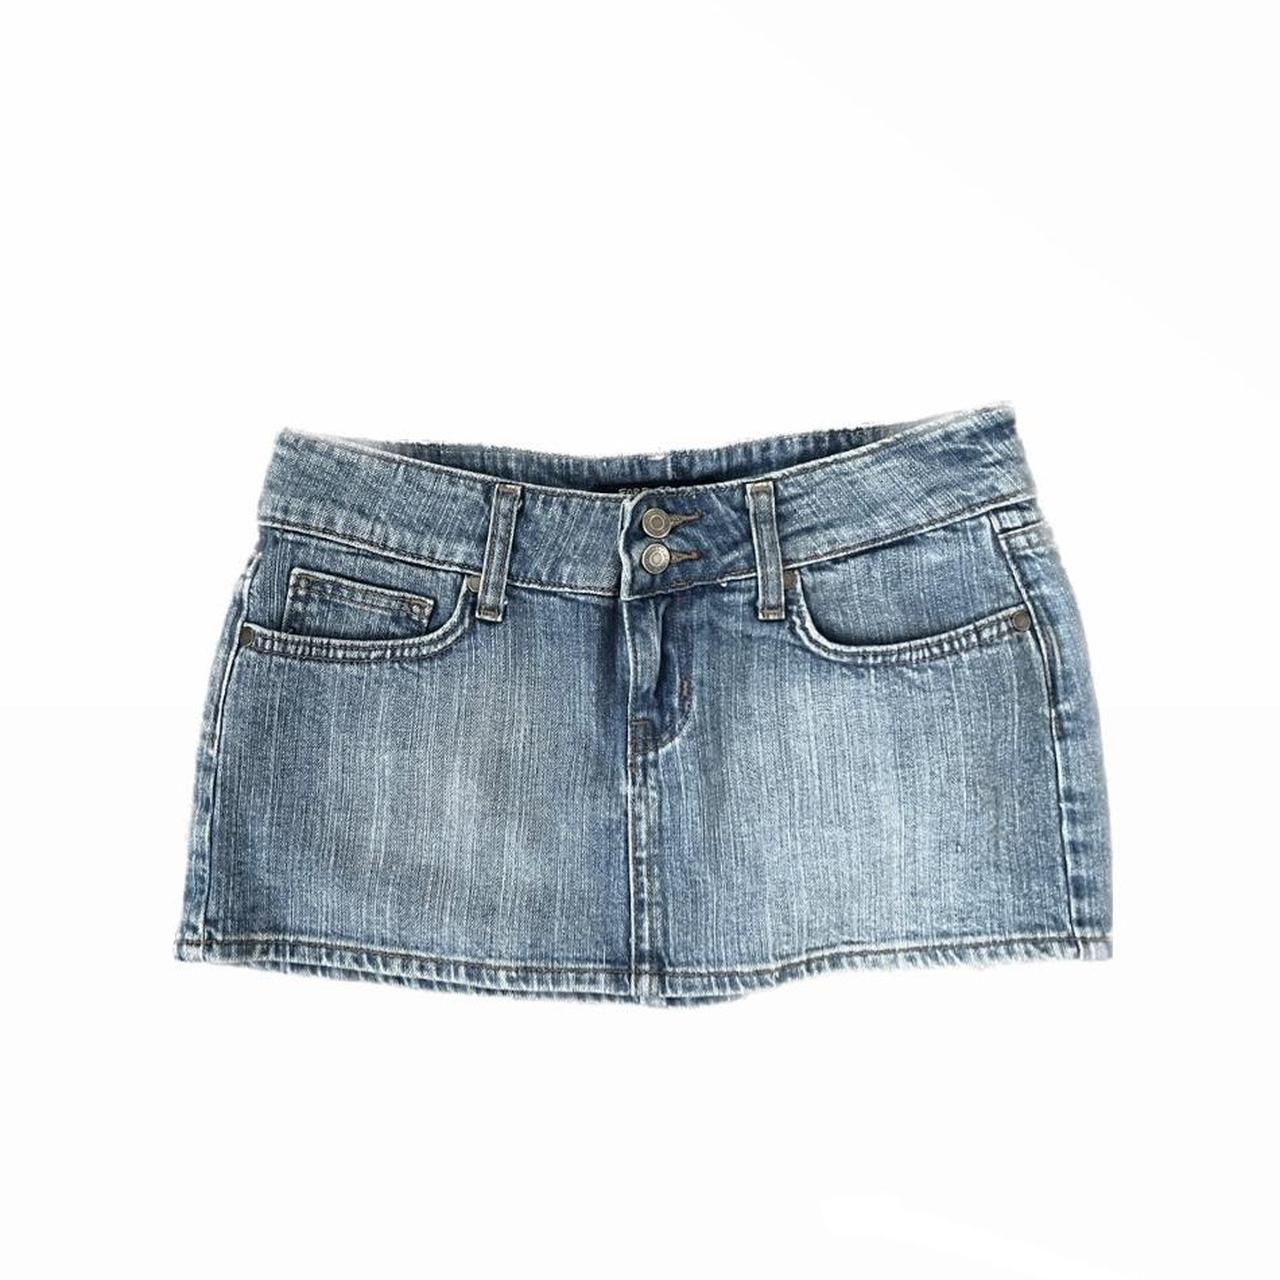 Vintage forever 21 micro mini jean skirt size 26 - Depop